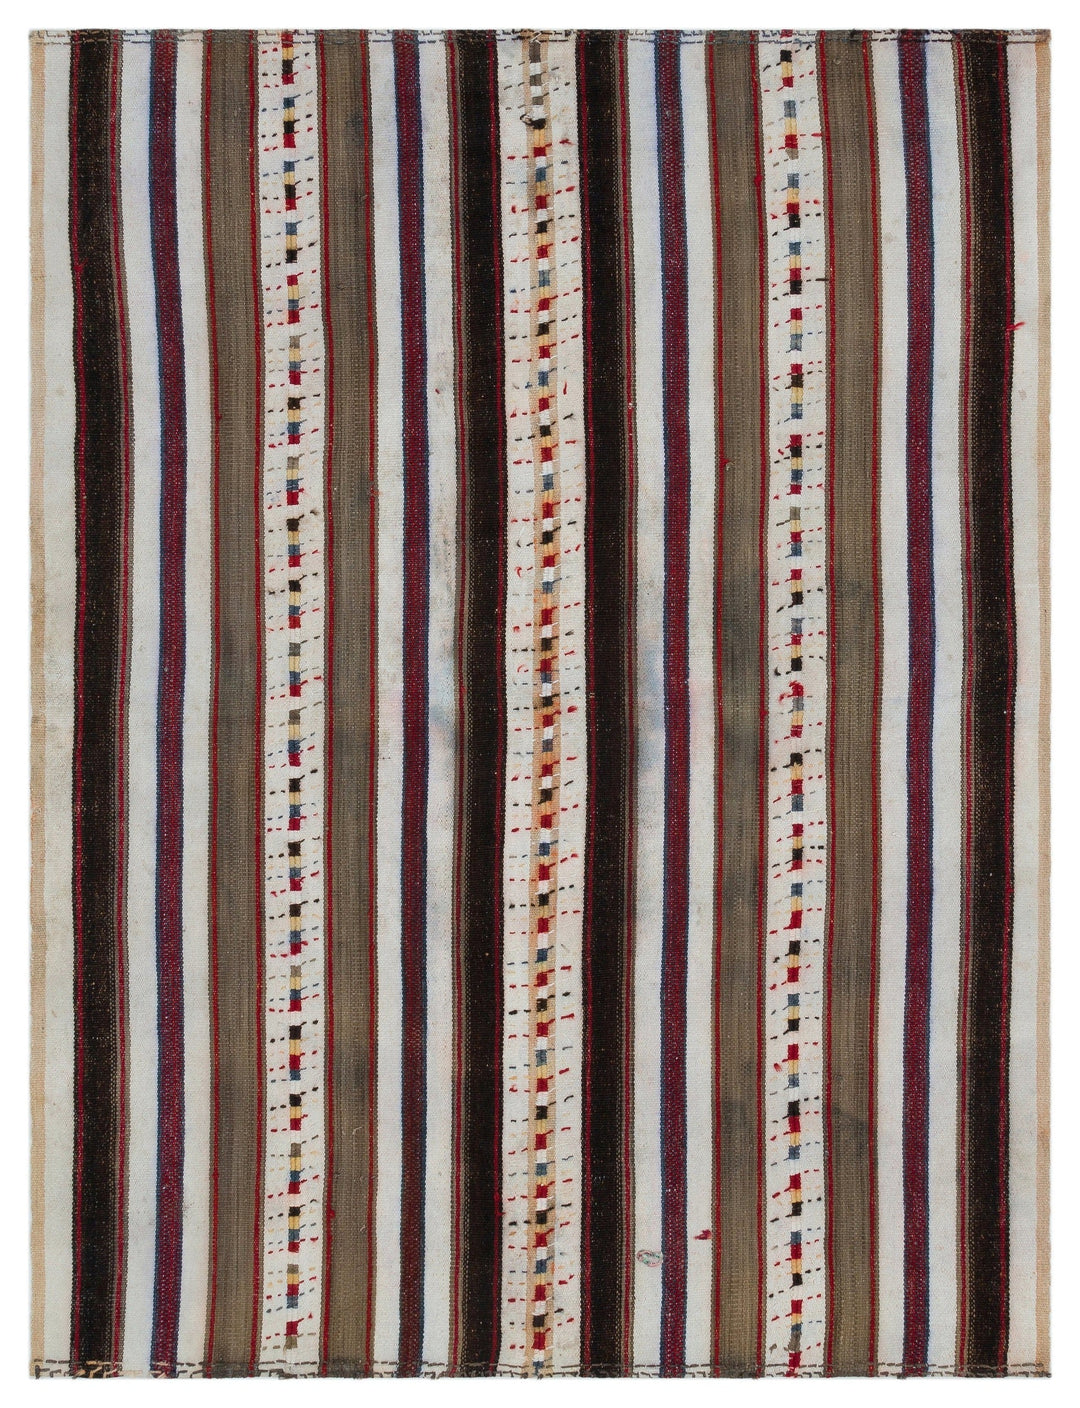 Cretan Beige Striped Wool Hand-Woven Carpet 158 x 214